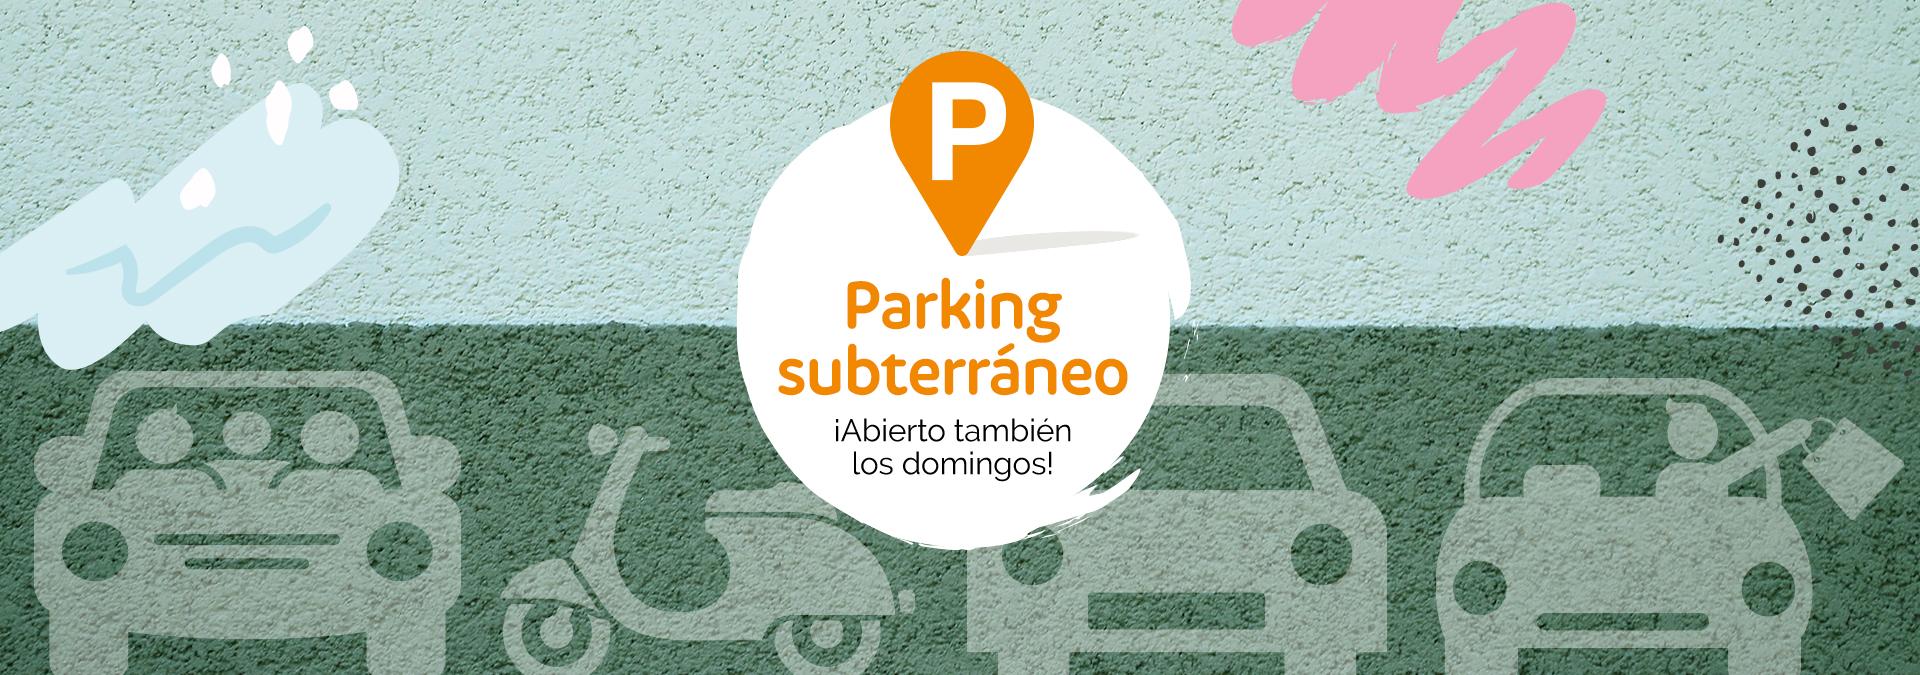 parking-frontal_web-1920x675.jpg